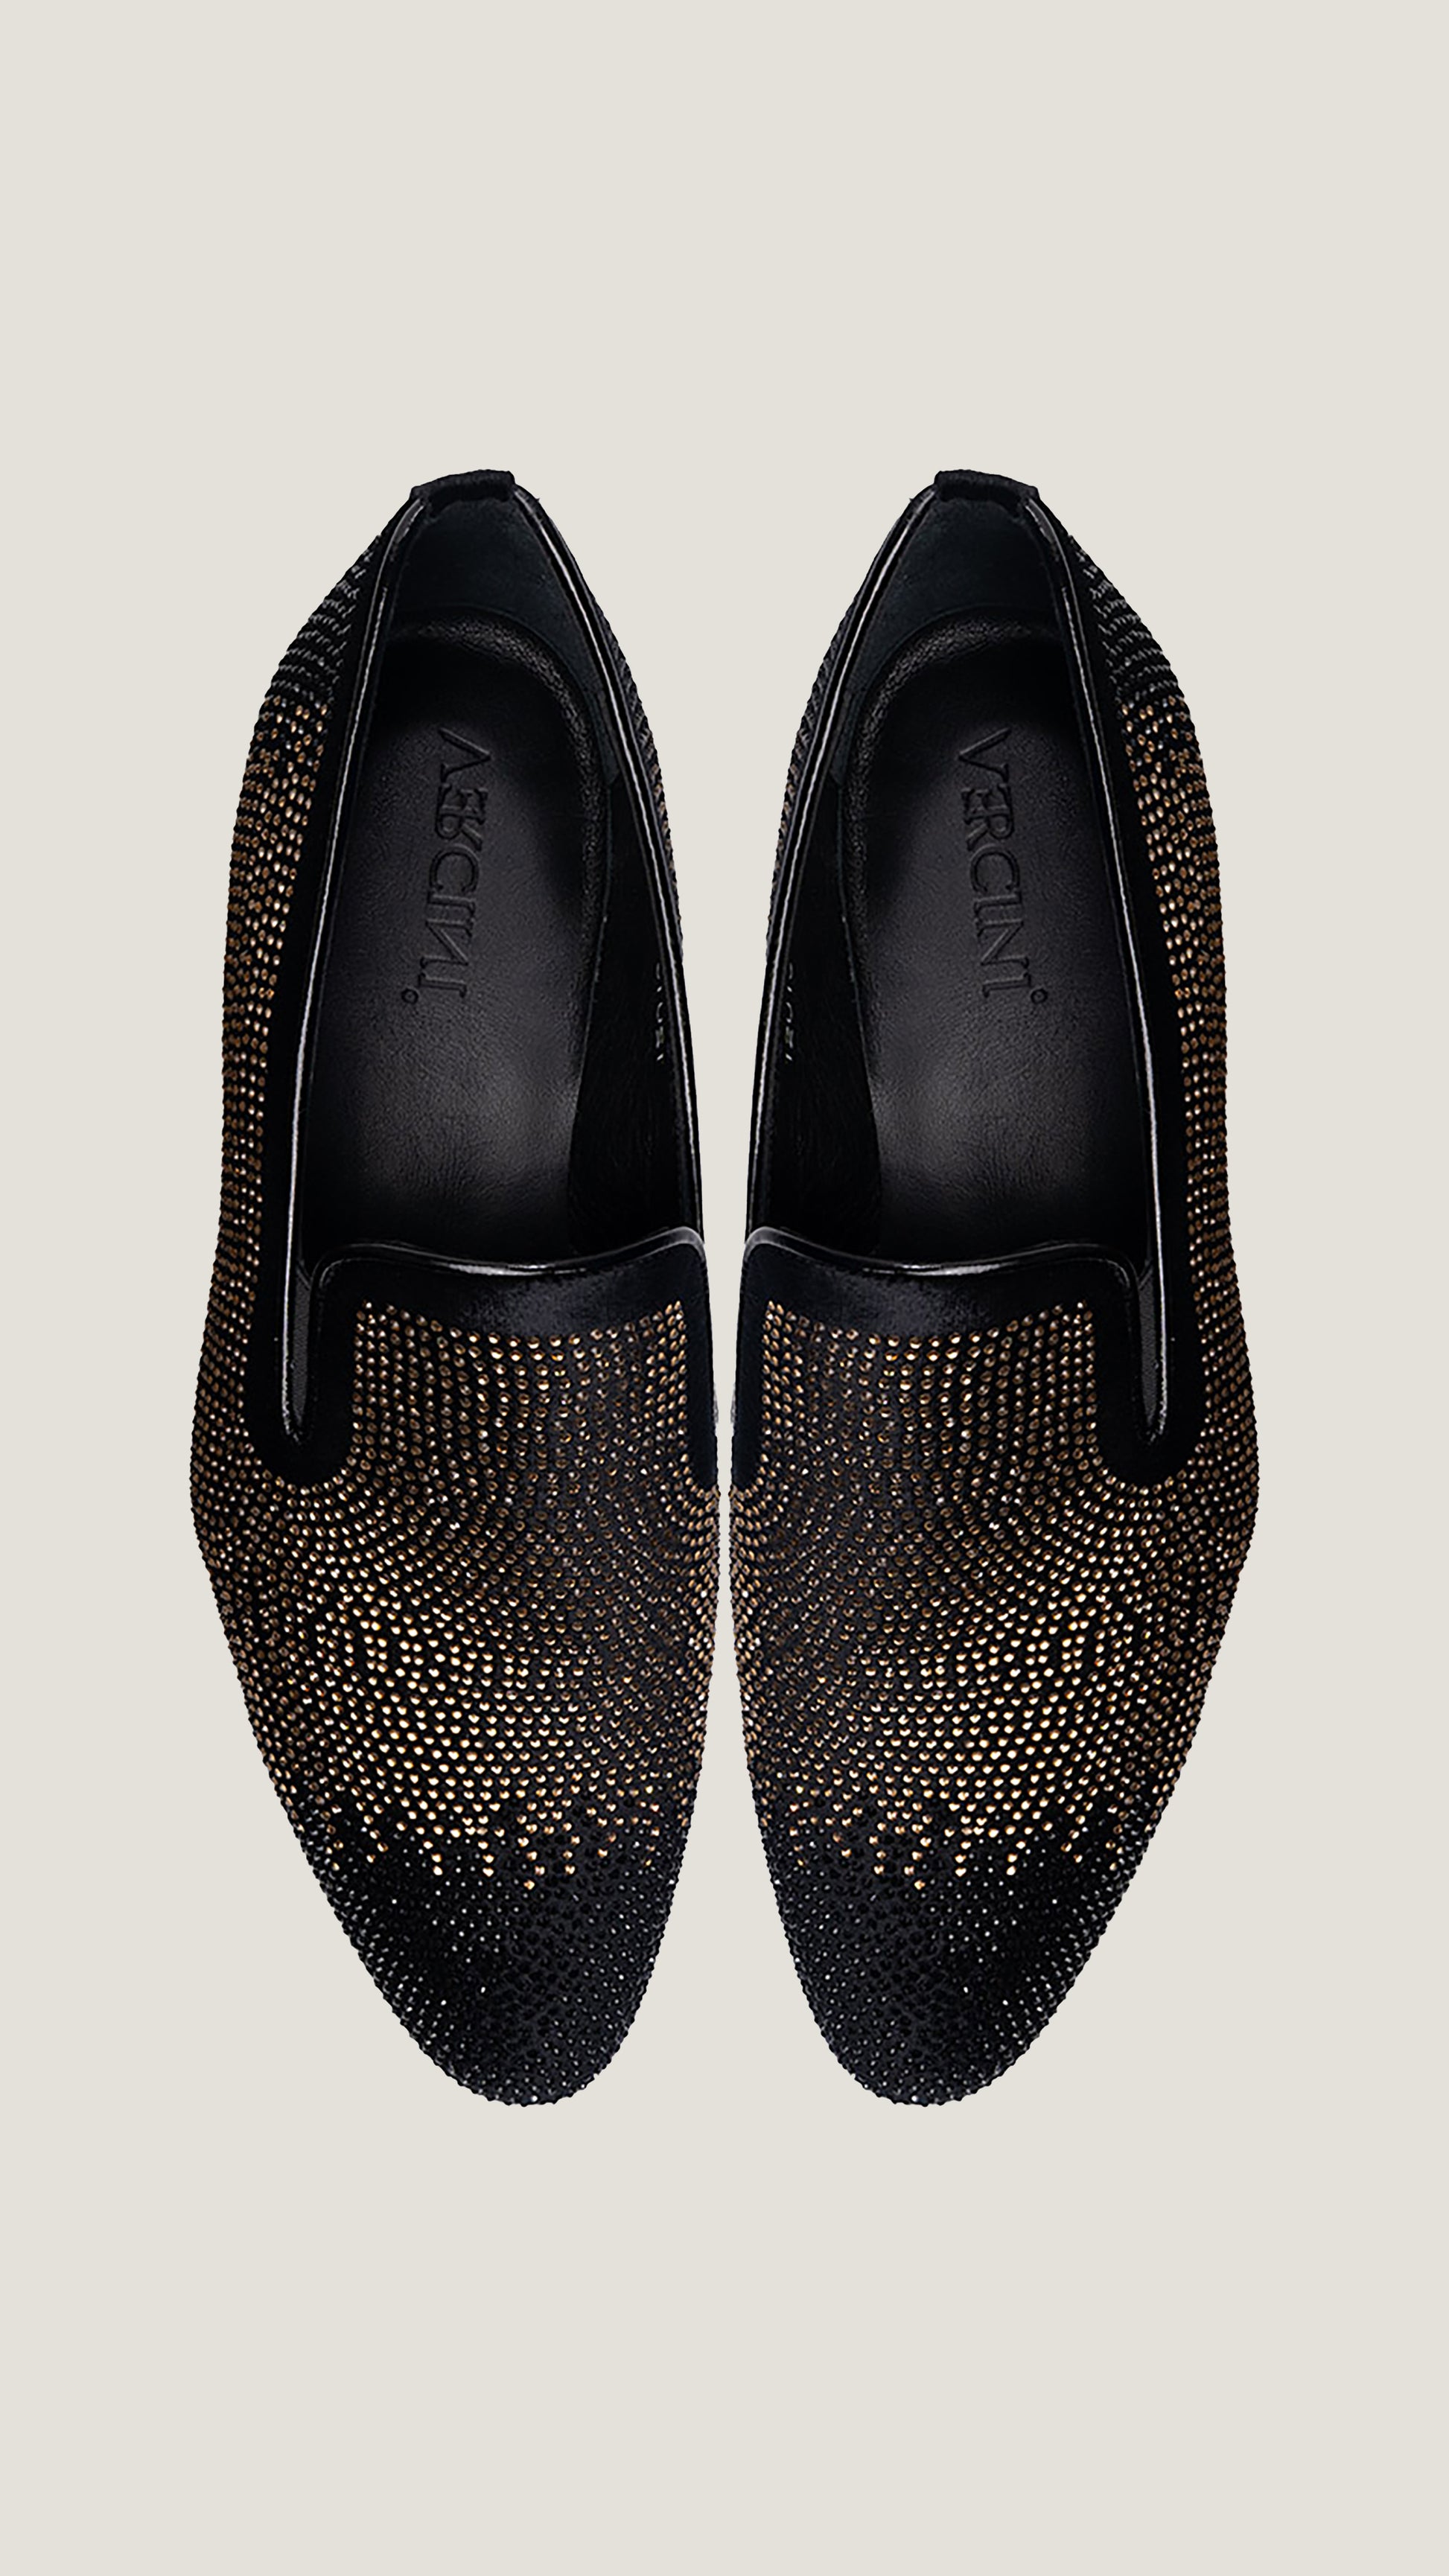 Men's Designer Crystal-Embellished Loafers by Vercini SHOES Ph inventory shoes Vercini